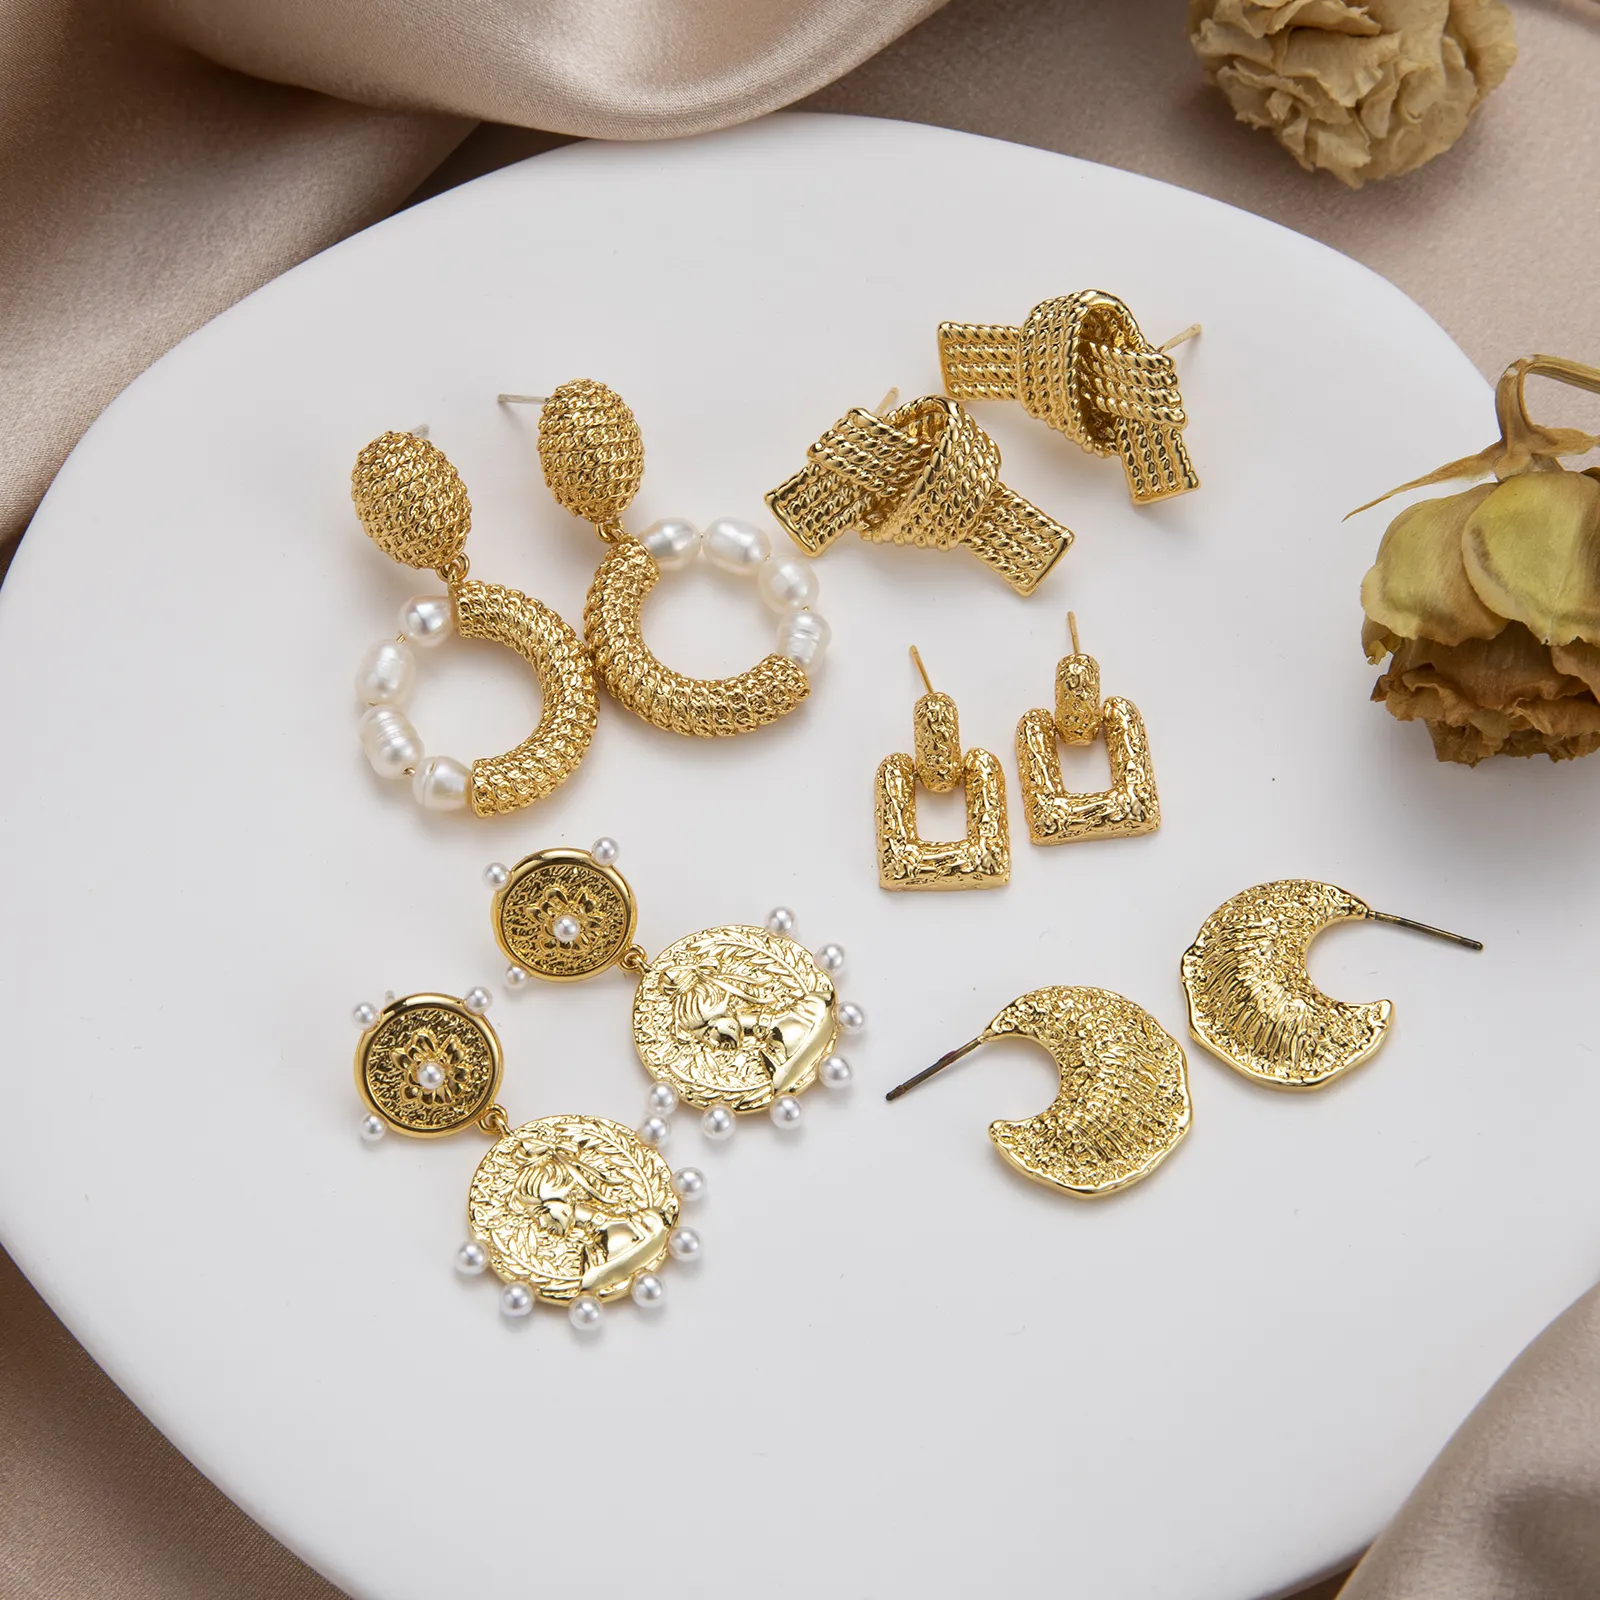 Minstone Custom Vintage Earrings 14k Gold Plated Geometric Bow Pendant Thick Pearl Earrings Jewelry for Women Girls